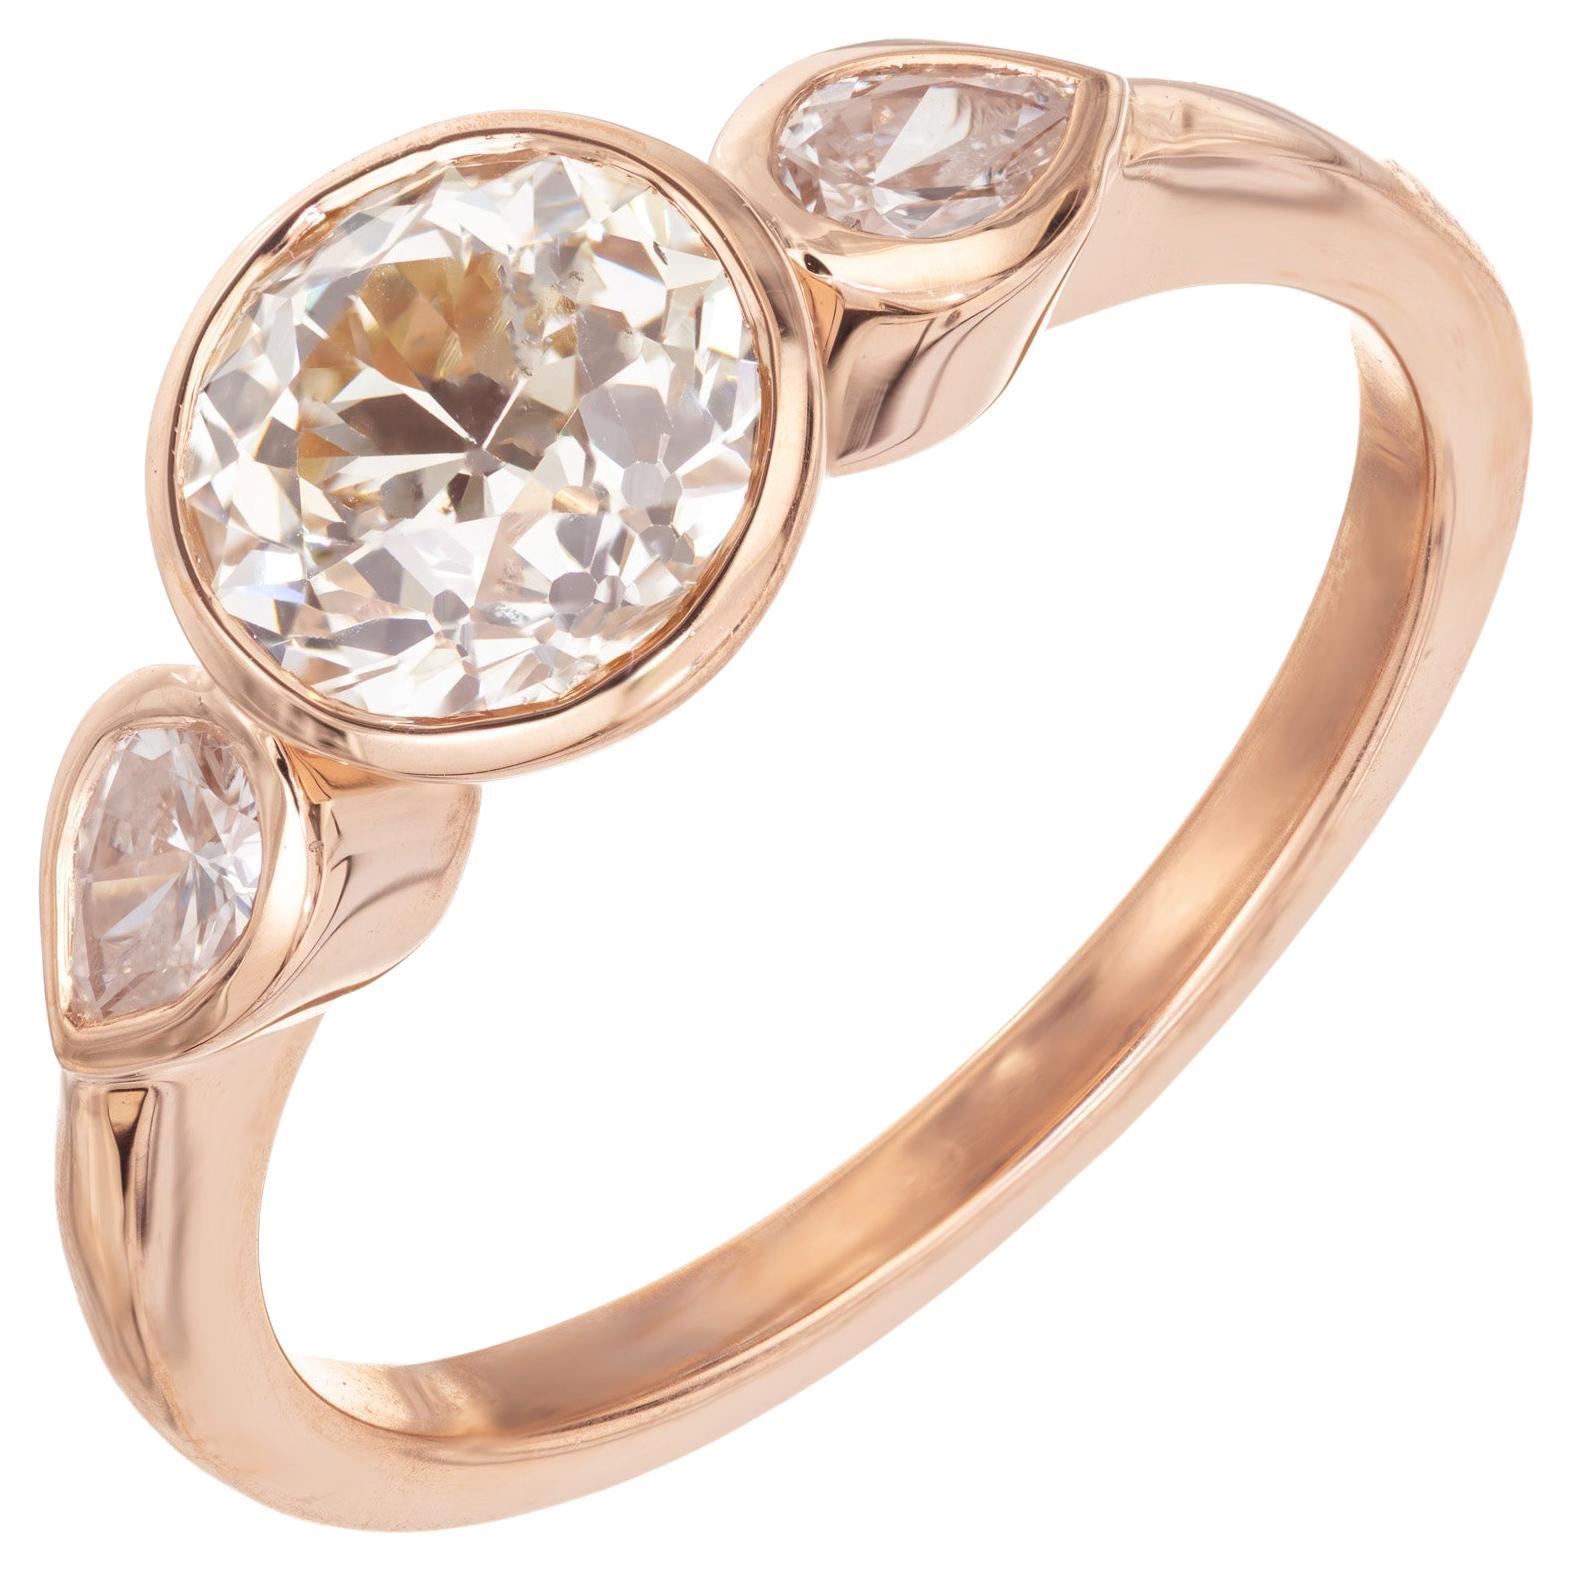 Peter Suchy GIA Certified 1.42 Carat Round Diamond Rose Gold Engagement Ring 